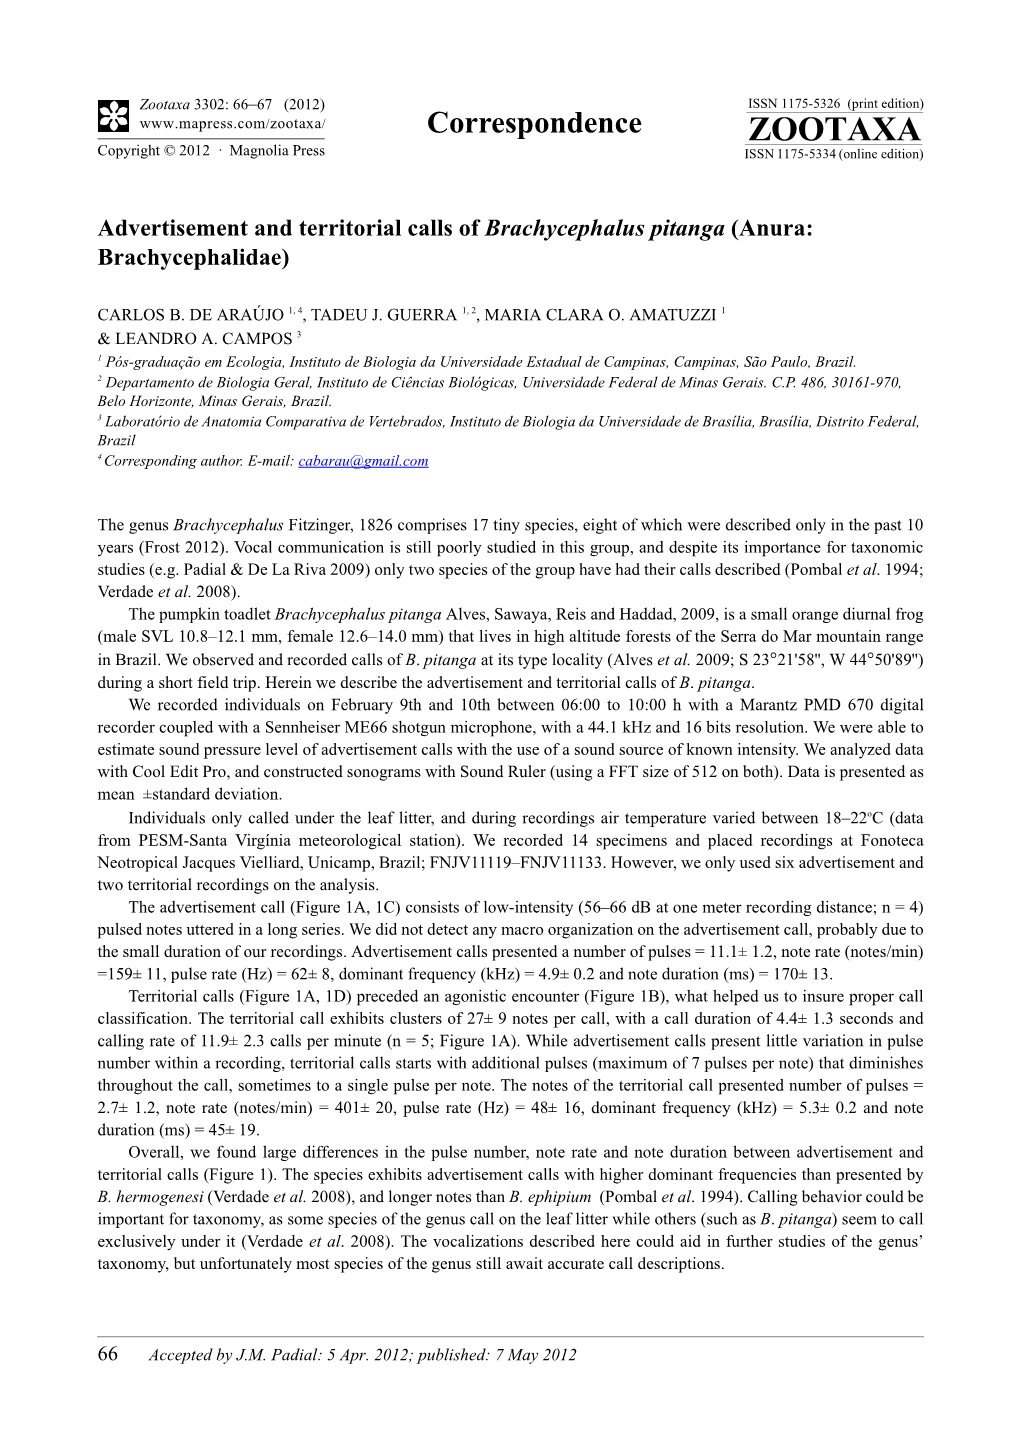 Advertisement and Territorial Calls of Brachycephalus Pitanga (Anura: Brachycephalidae)